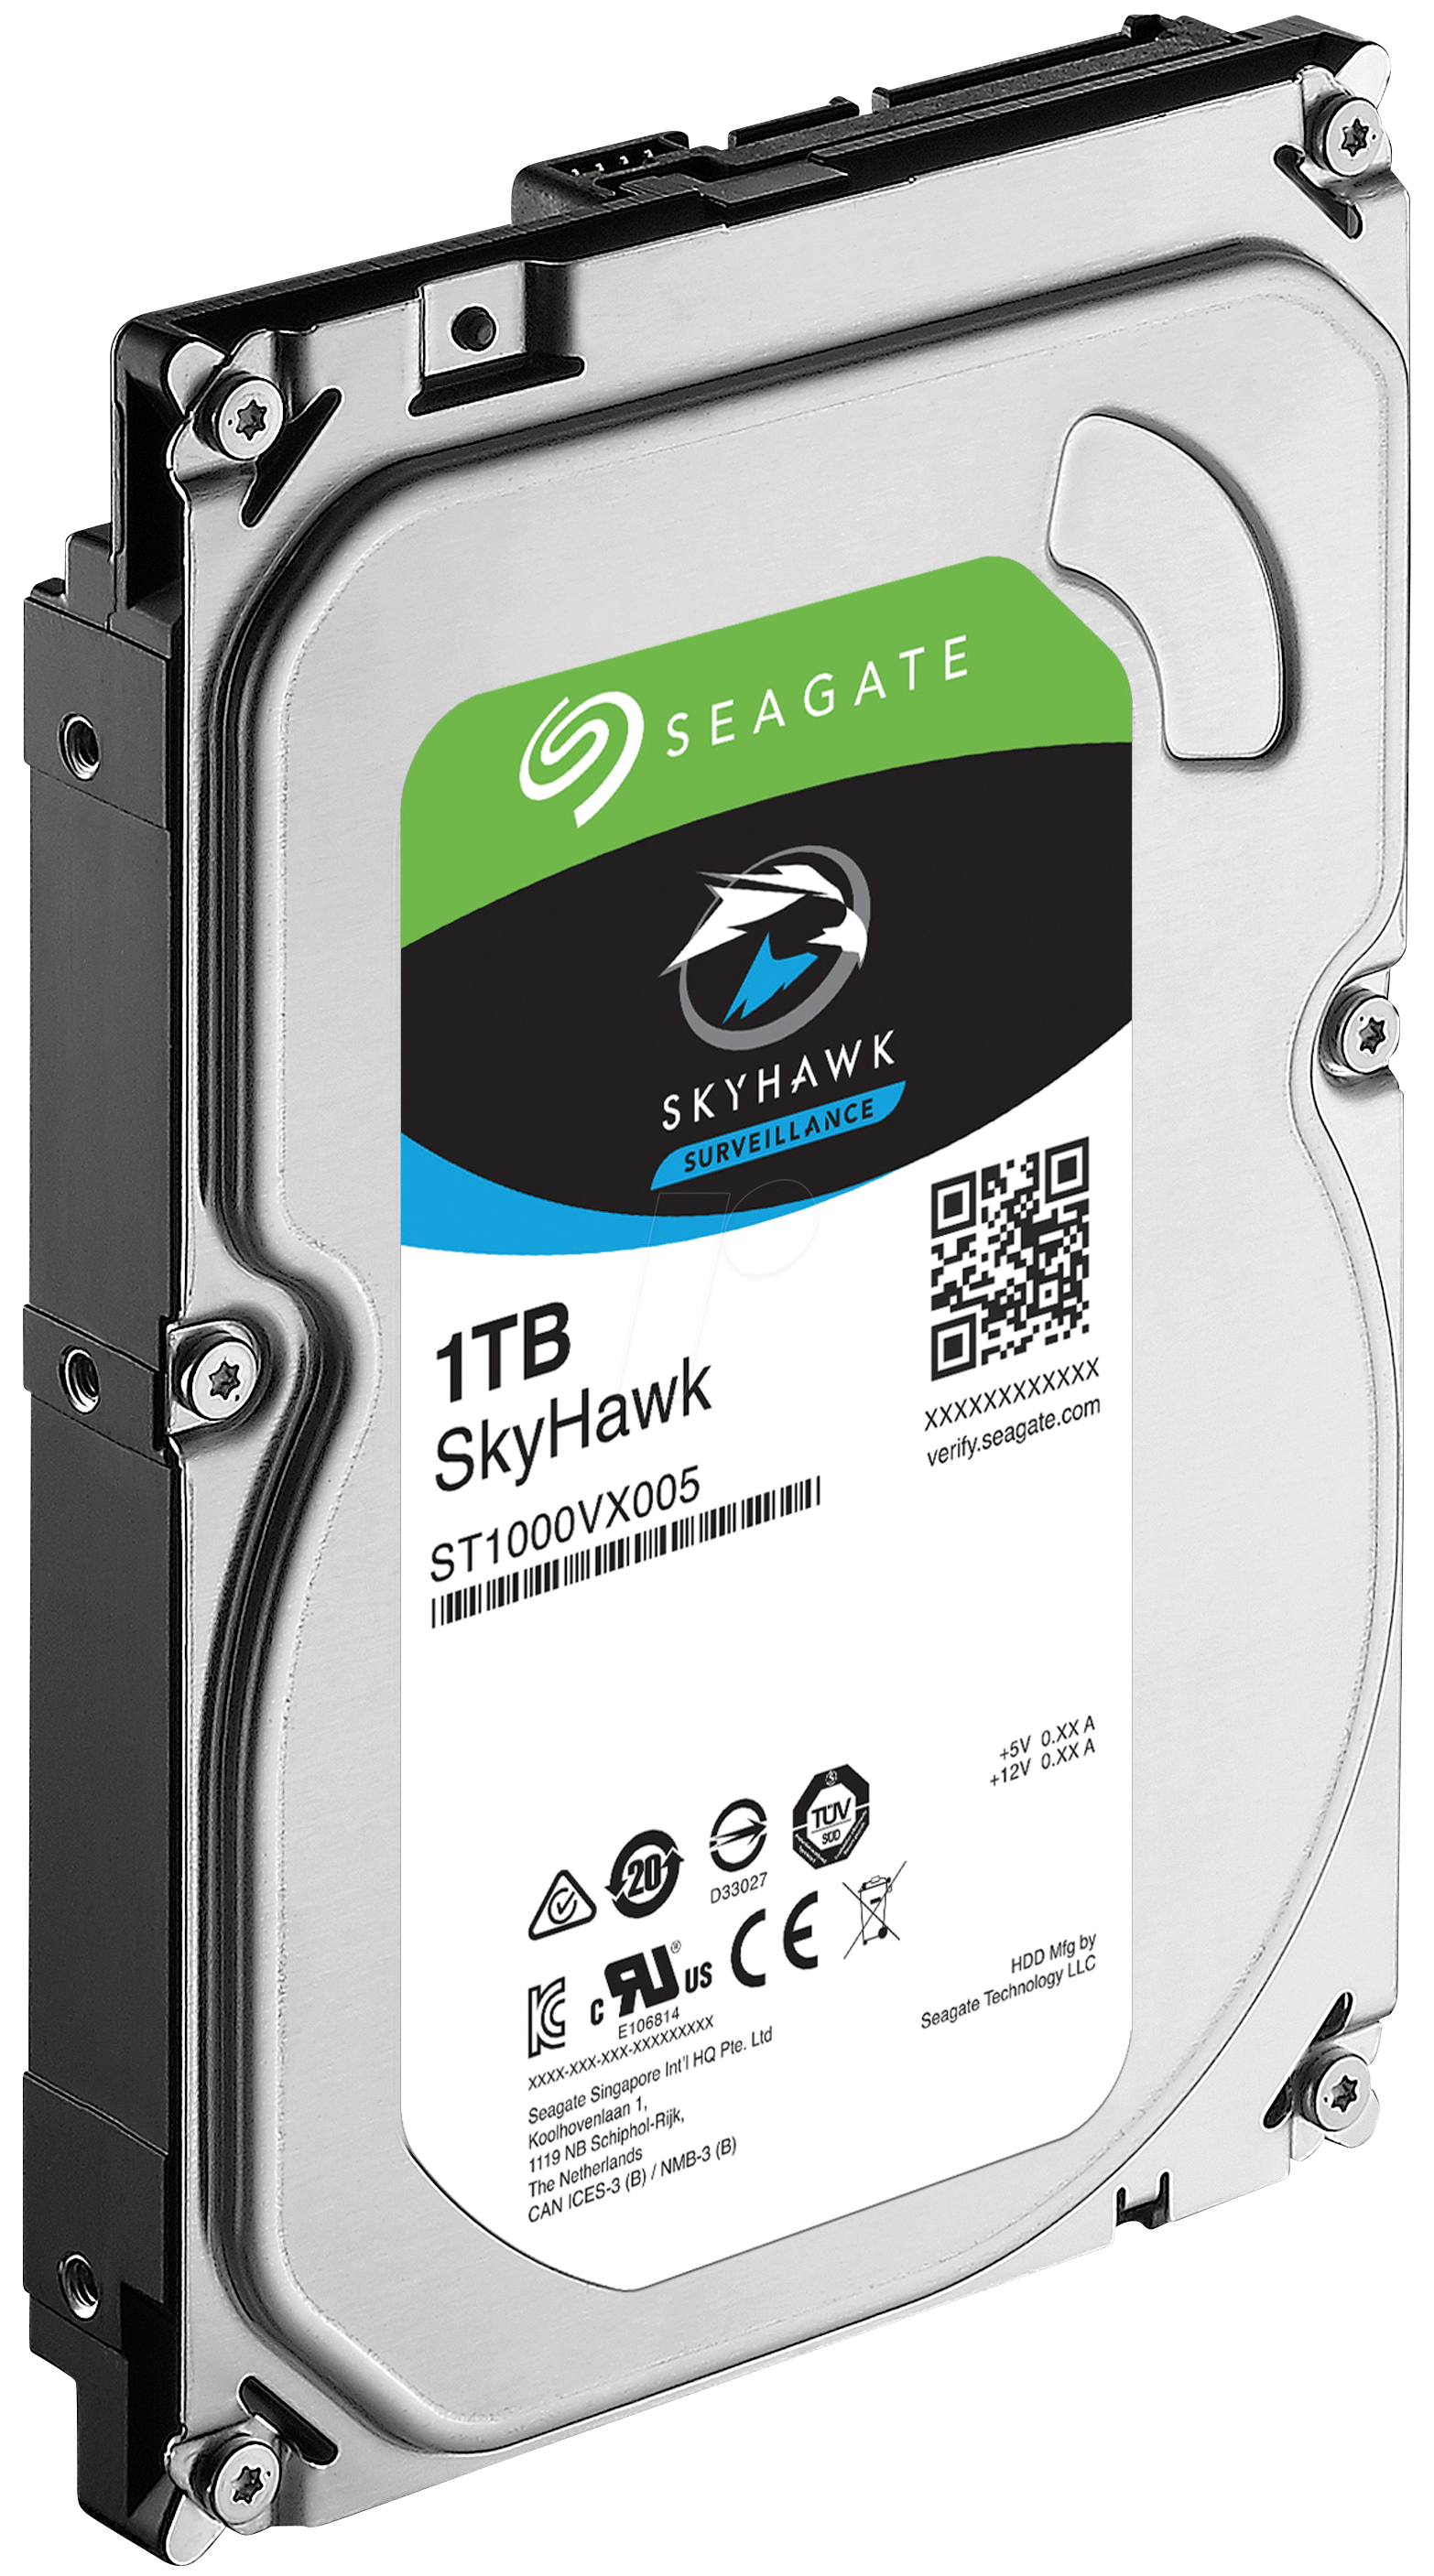 Seagate SkyHawk 1TB 3.5 inch Internal Surveillance Harddrive – ST1000VX005